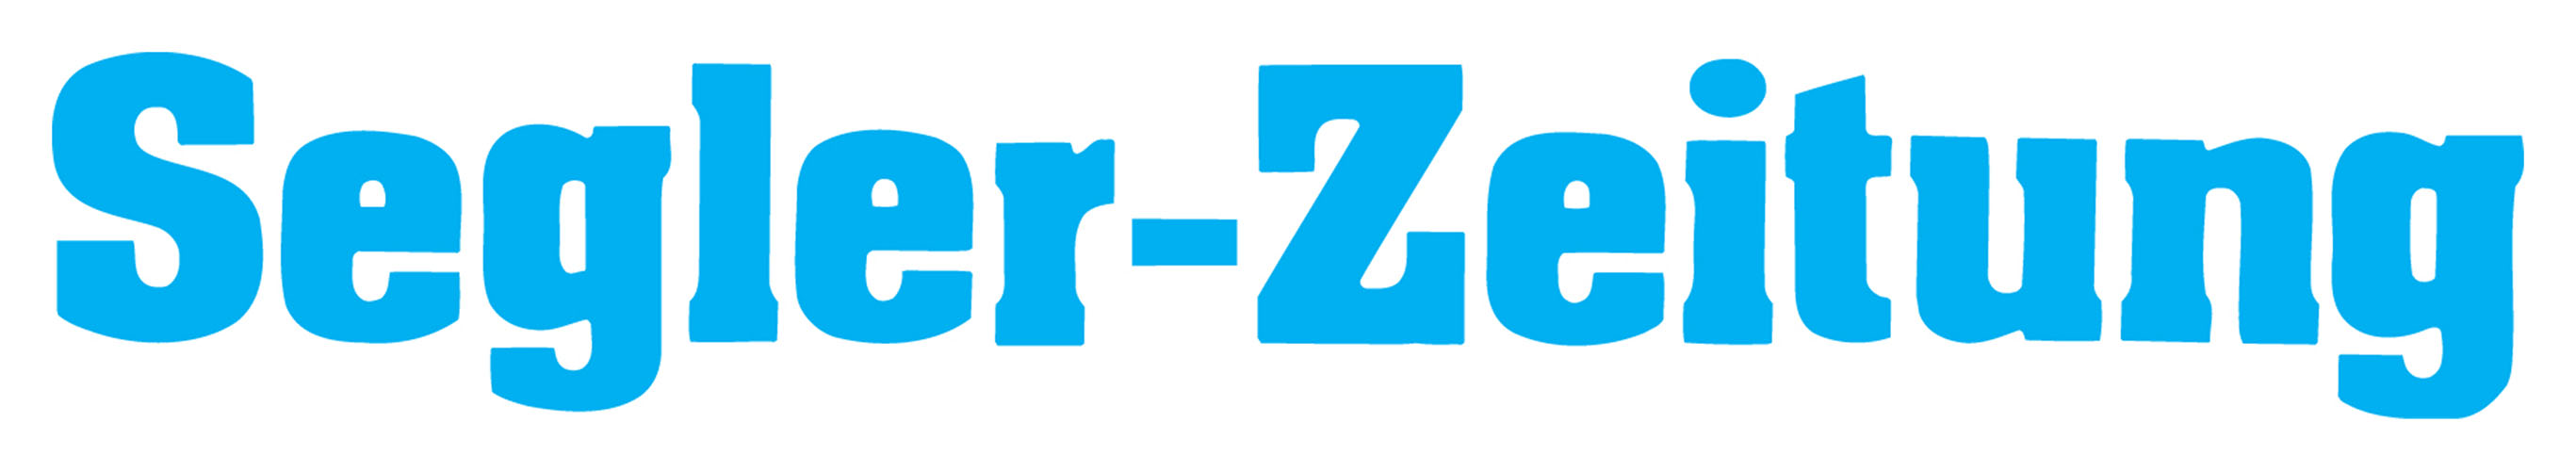 segler-zeitung_logo_1sp_horizontal_300.jpg